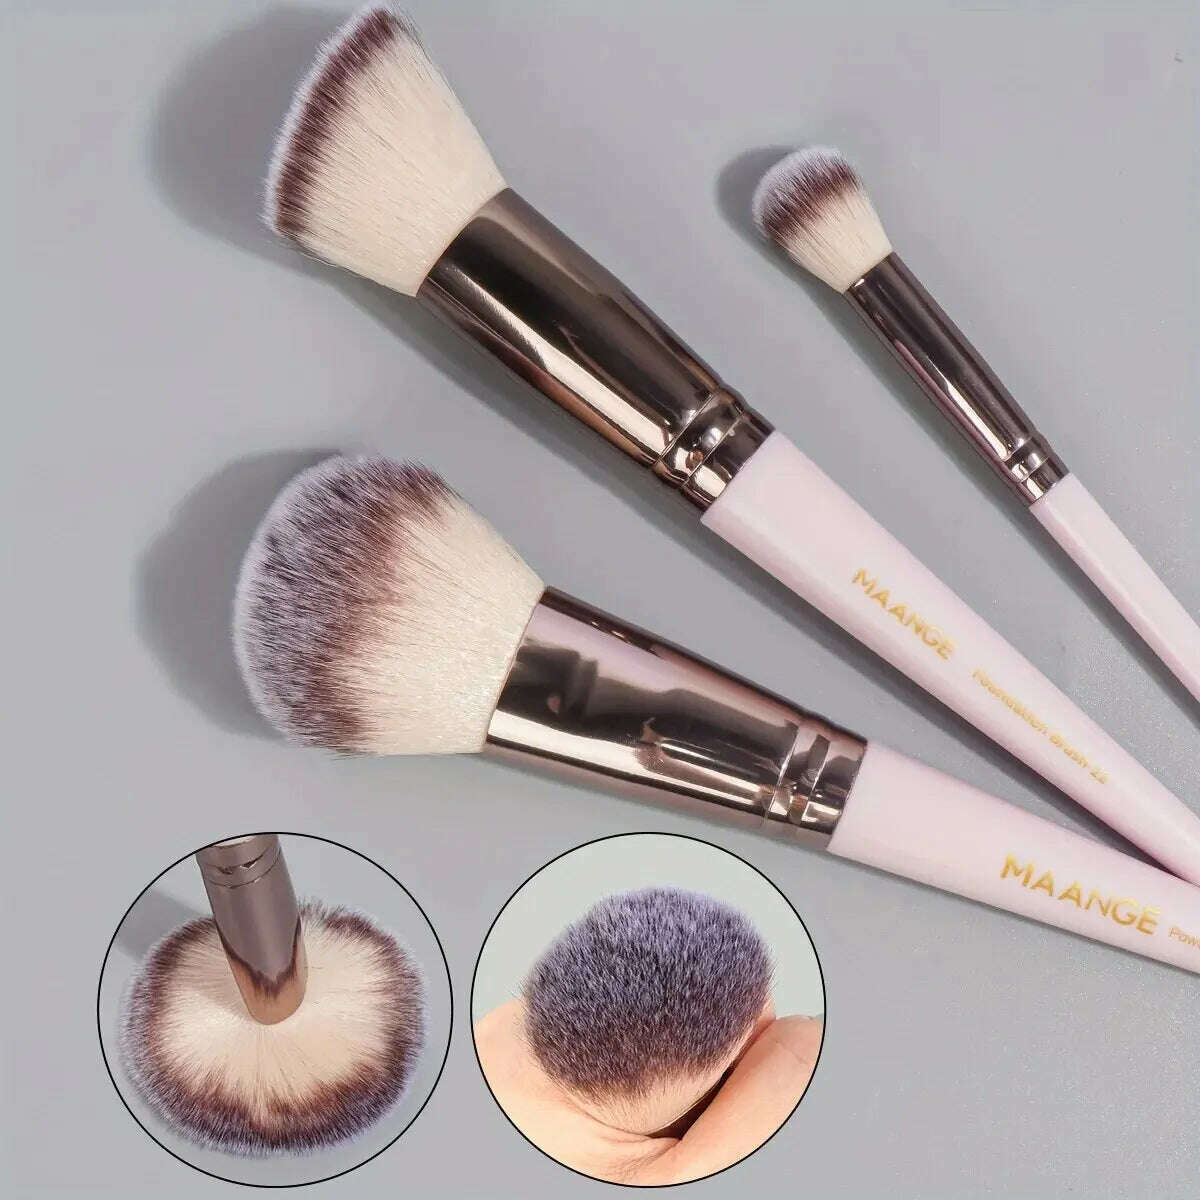 KIMLUD, MAANGE 30pcs Professional Makeup Brush Set Foundation Concealers Eye Shadows Powder Blush Blending Brushes Beauty Tools with Bag, KIMLUD Women's Clothes